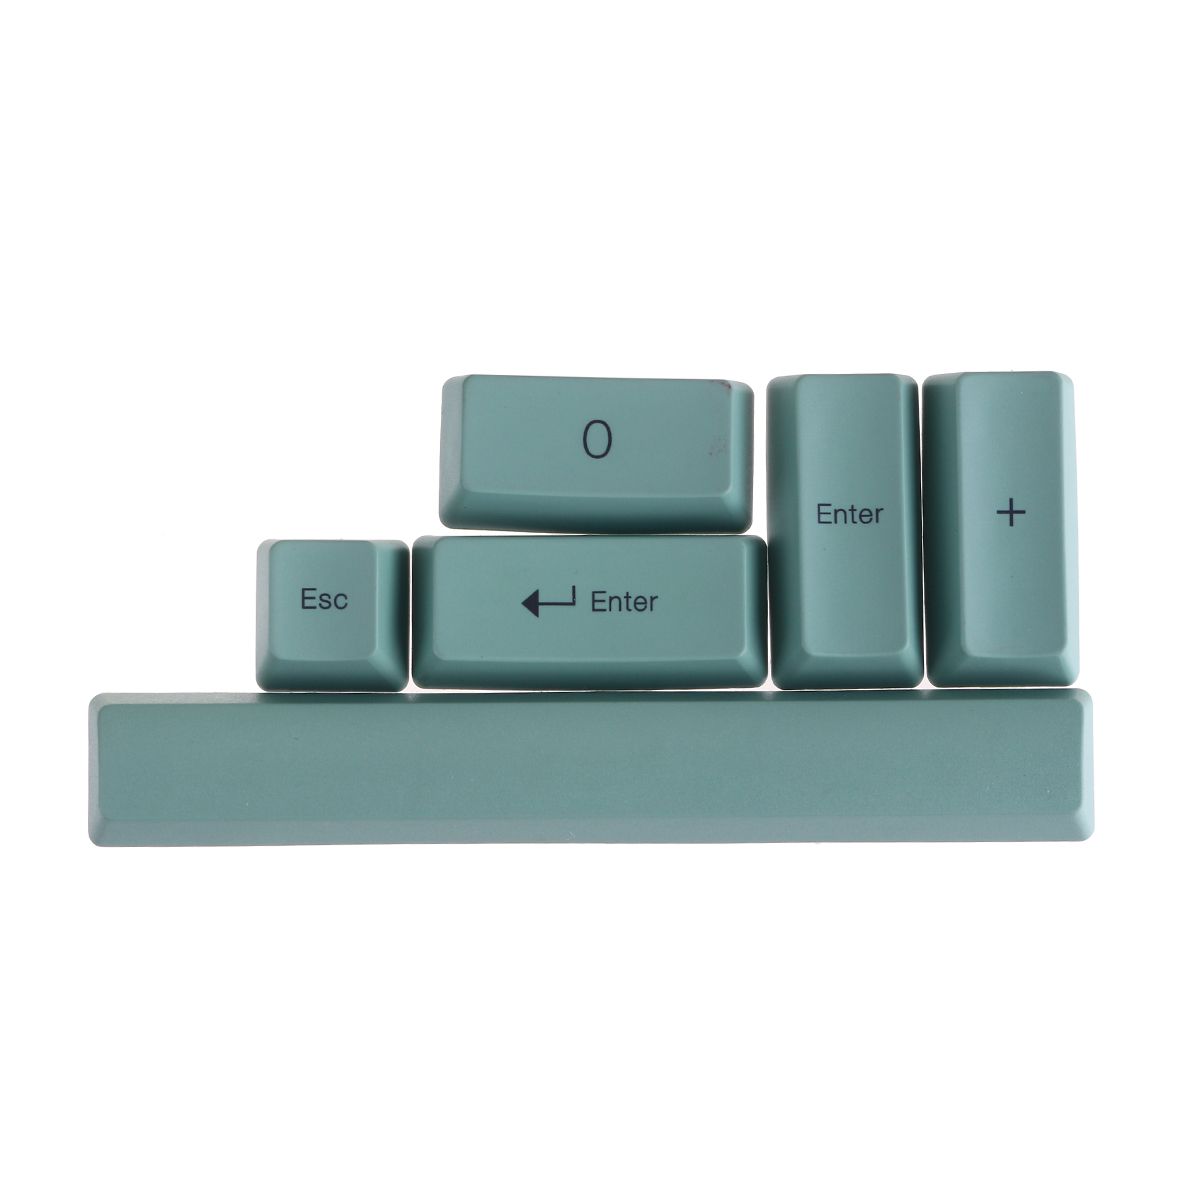 116-Keys-GreyWhite-Keycap-Set-OEM-Profile-PBT-Dye-Sublimation-Keycaps-for-Mechanical-Keyboard-1737525